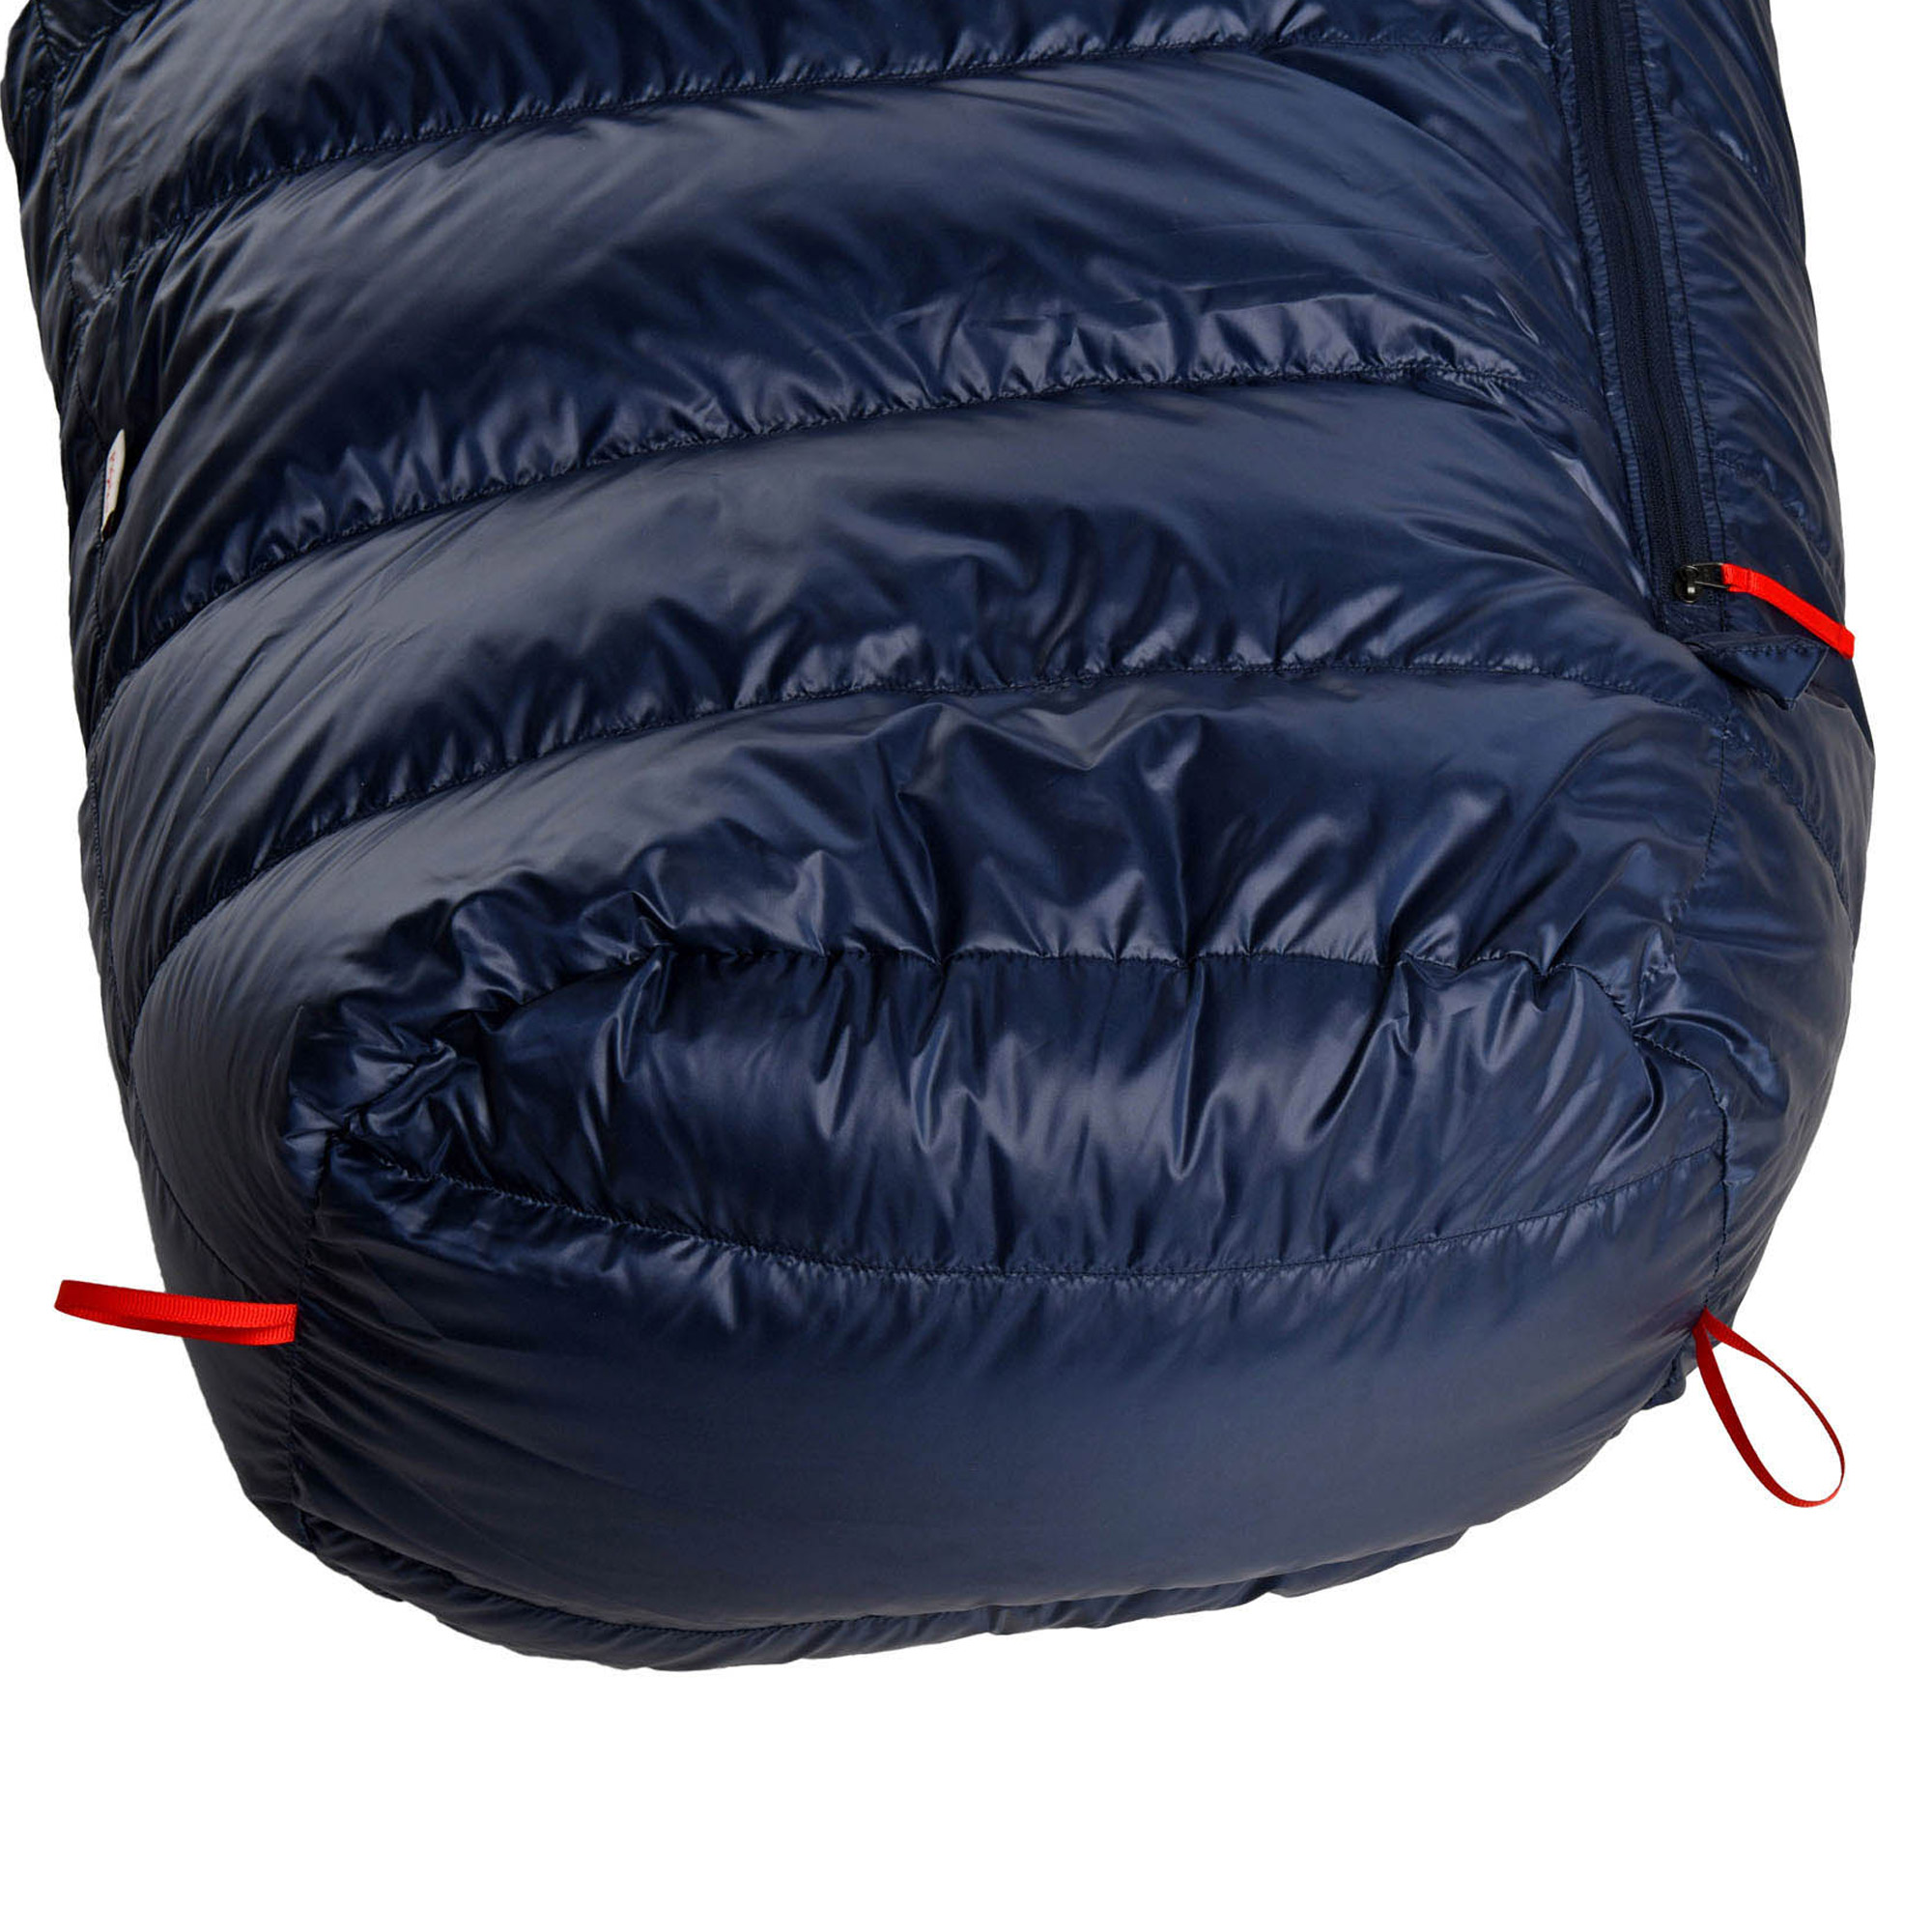 WP CORE, 950 sleeping bag, long, navy